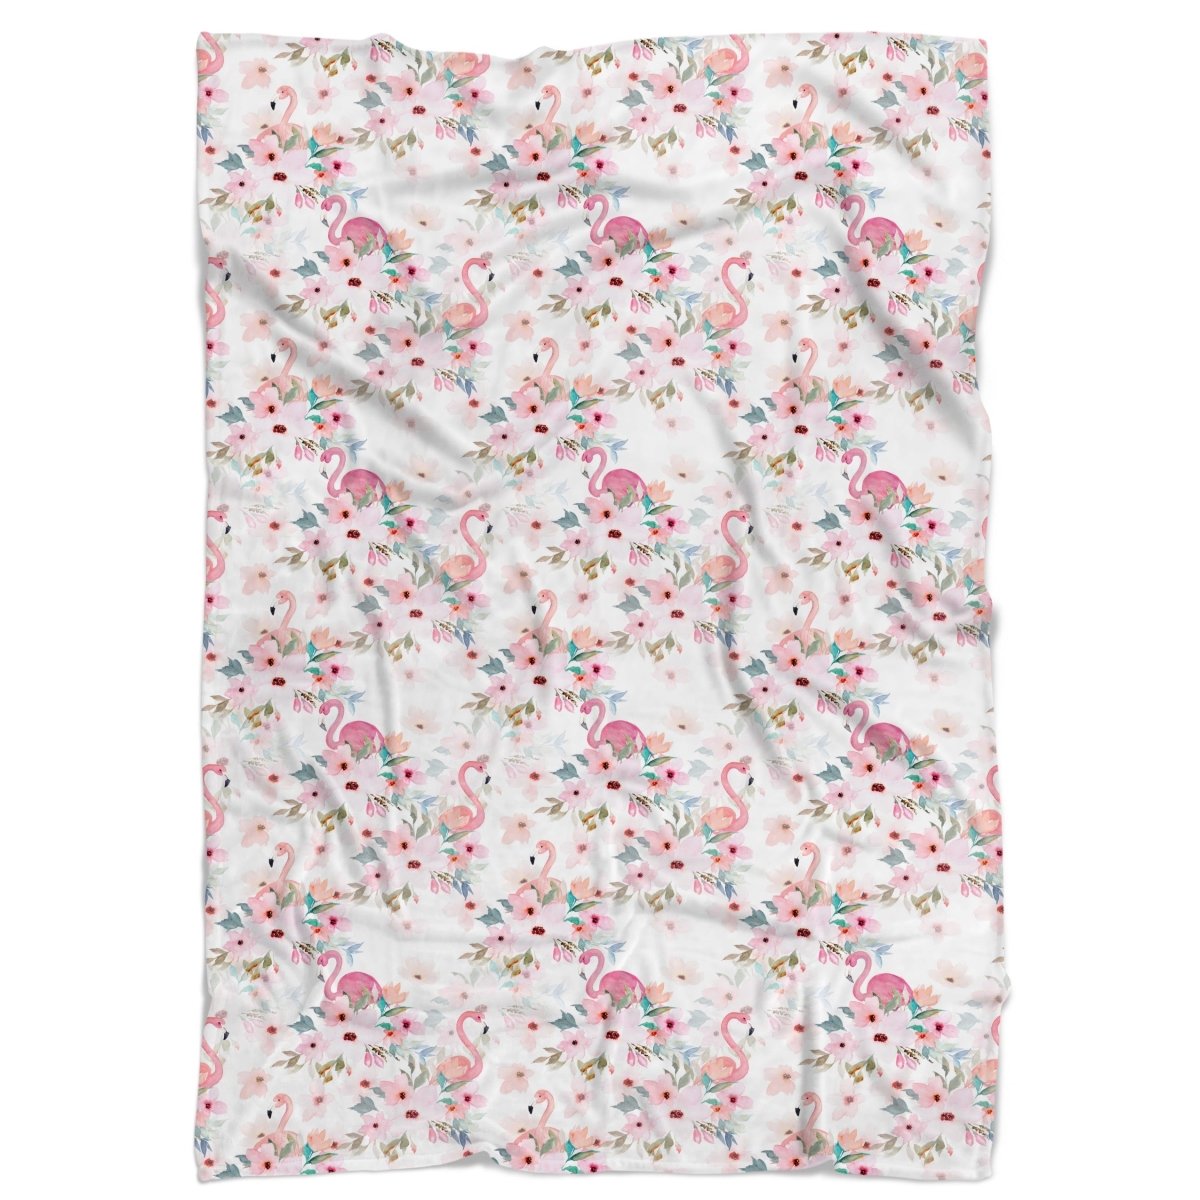 Flamingo Floral Minky Blanket - Flamingo Floral, gender_girl, Personalized_No